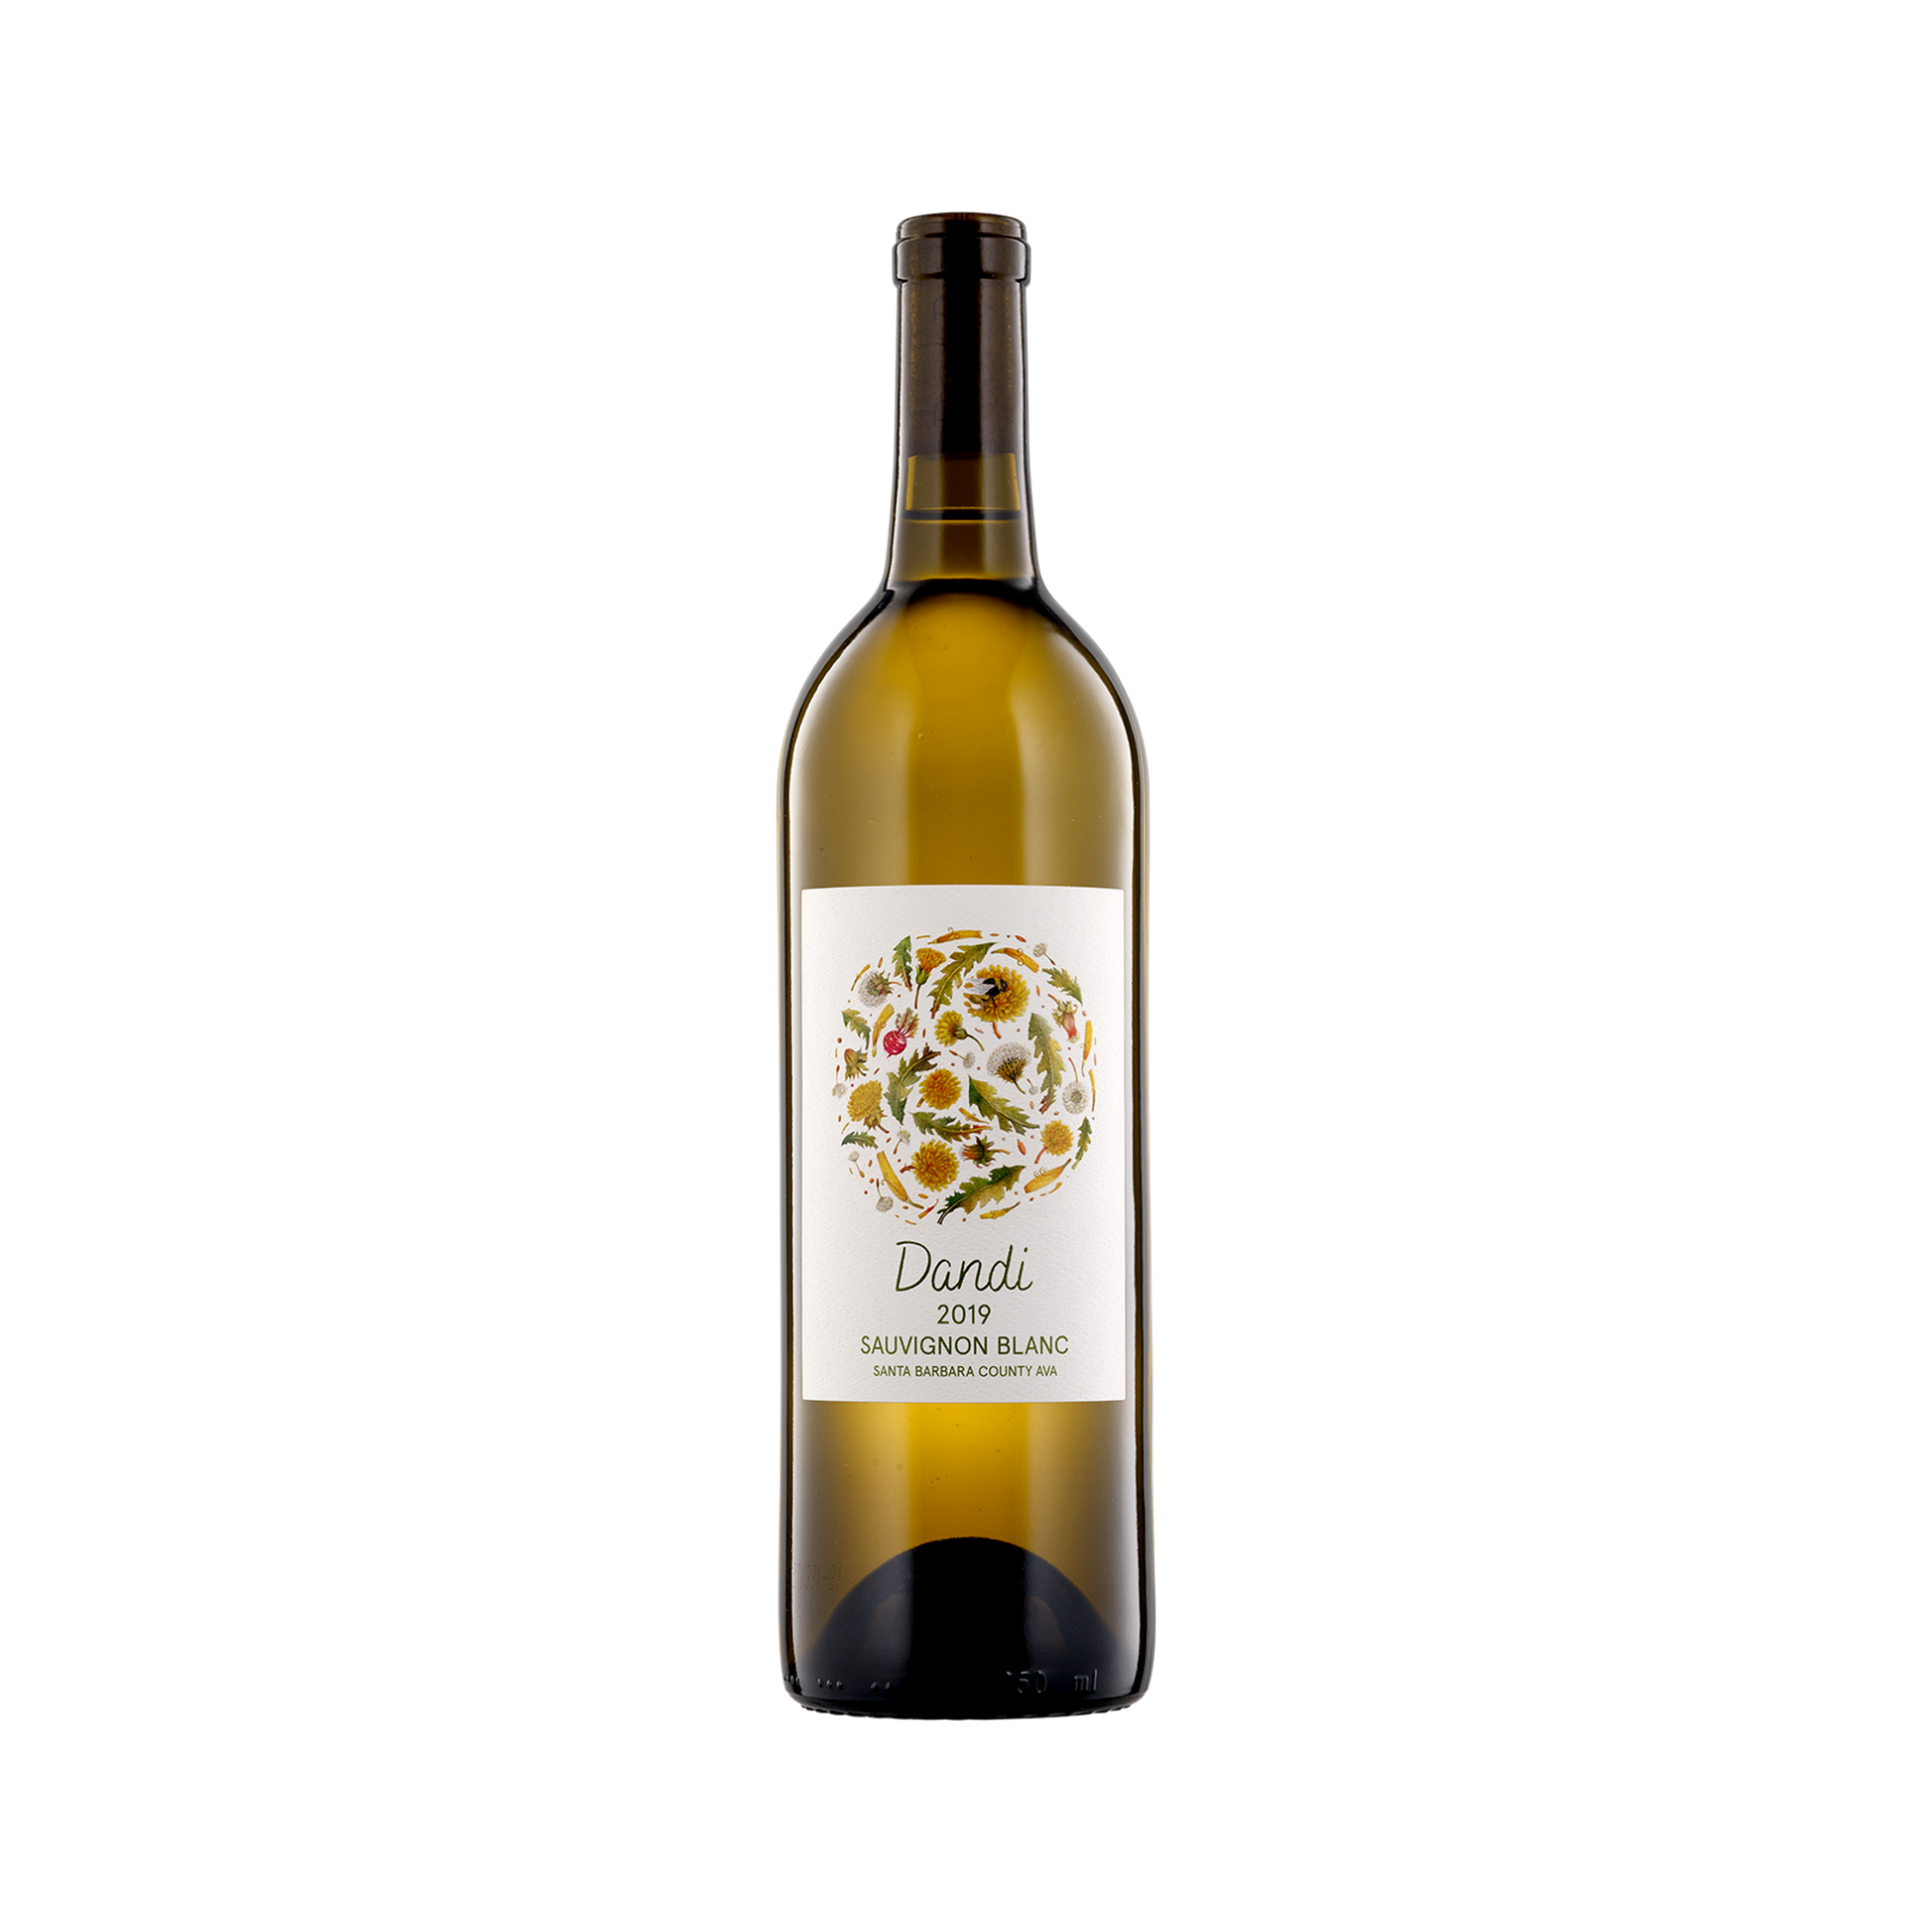 A bottle of Dandi 2019 Sauvignon Blanc